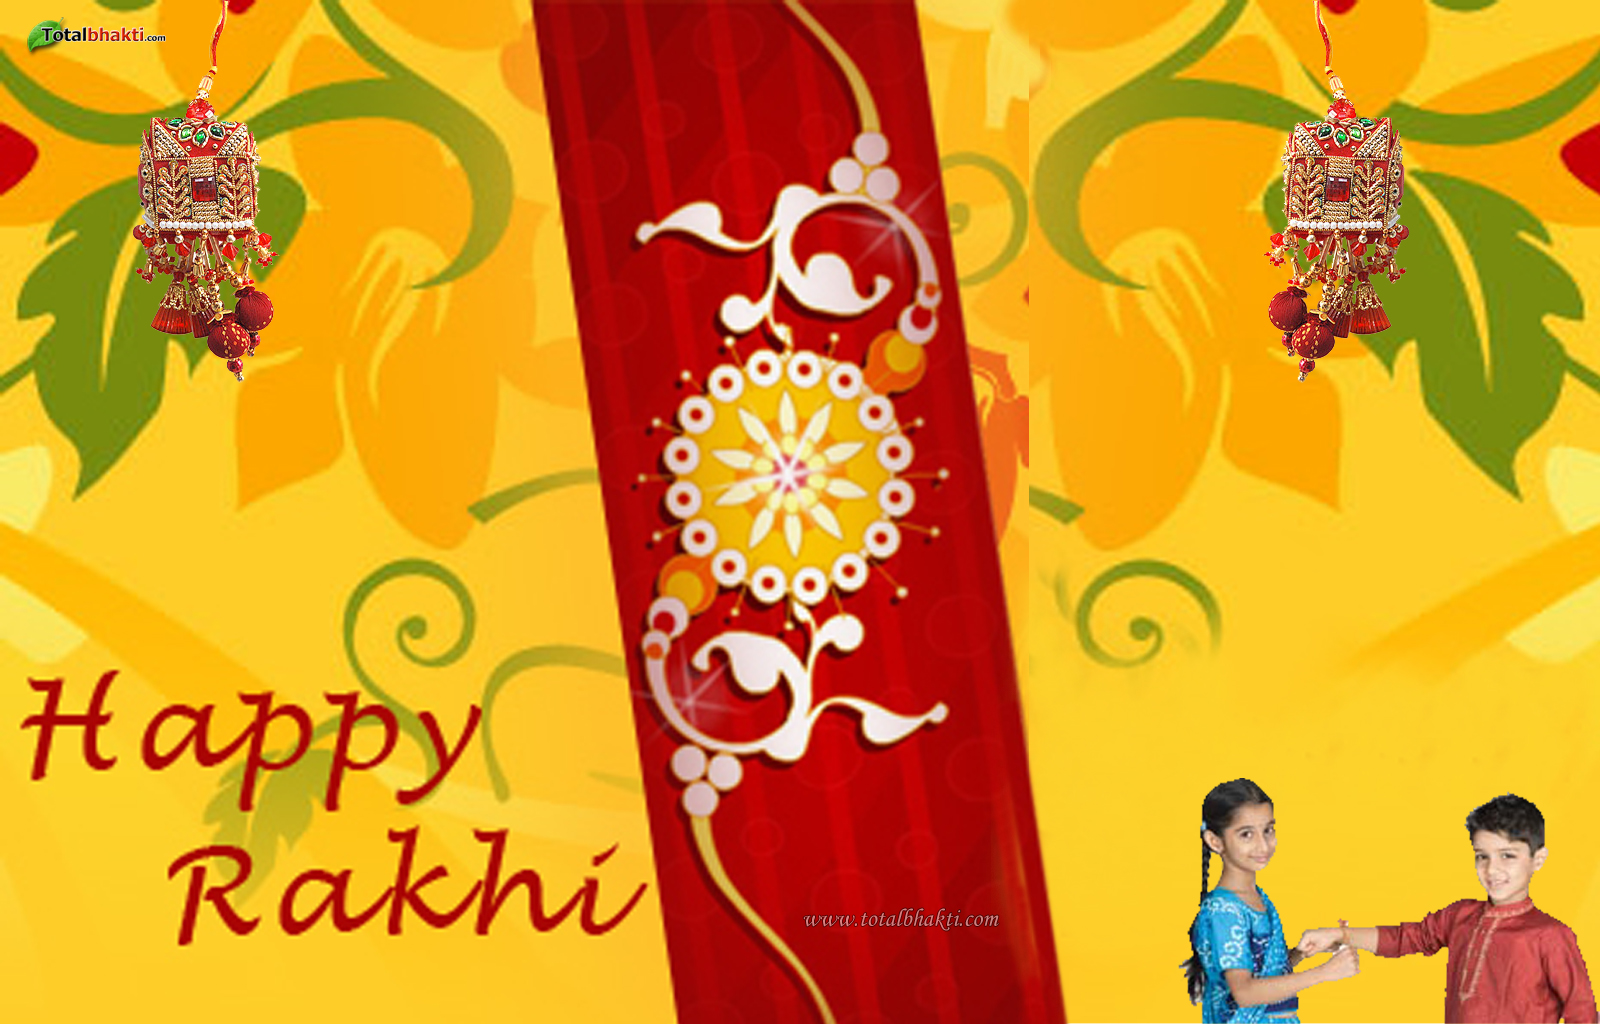 Best Rakhi Images, Greetings, Photos & Pics - Raksha Bandhan Photos Download  - 1600x1024 Wallpaper 